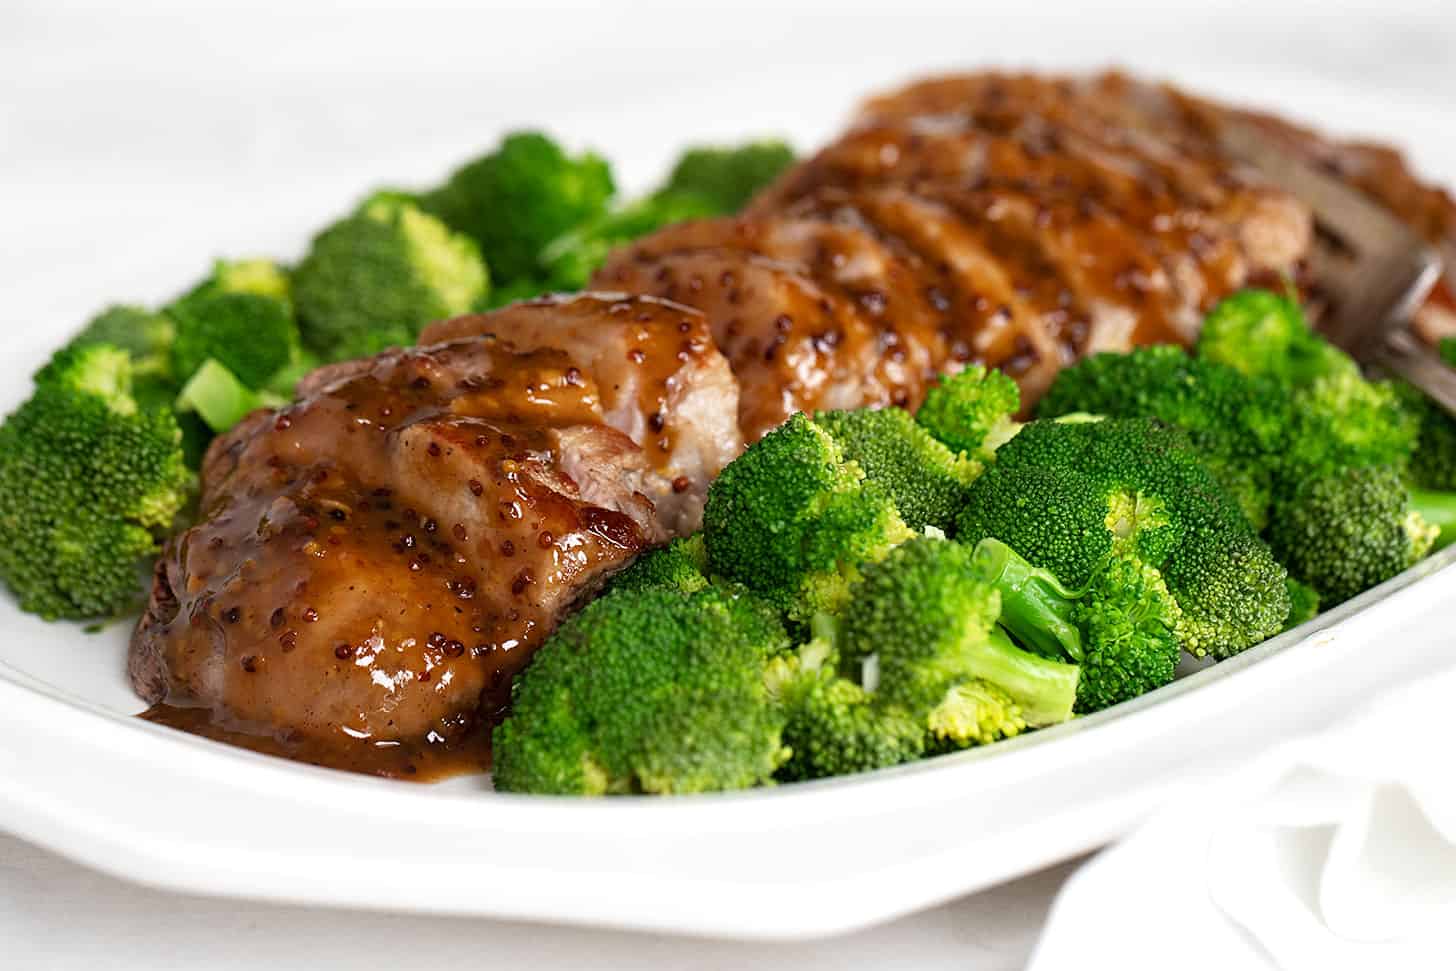 maple mustard pork tenderloin sliced on plated with broccoli